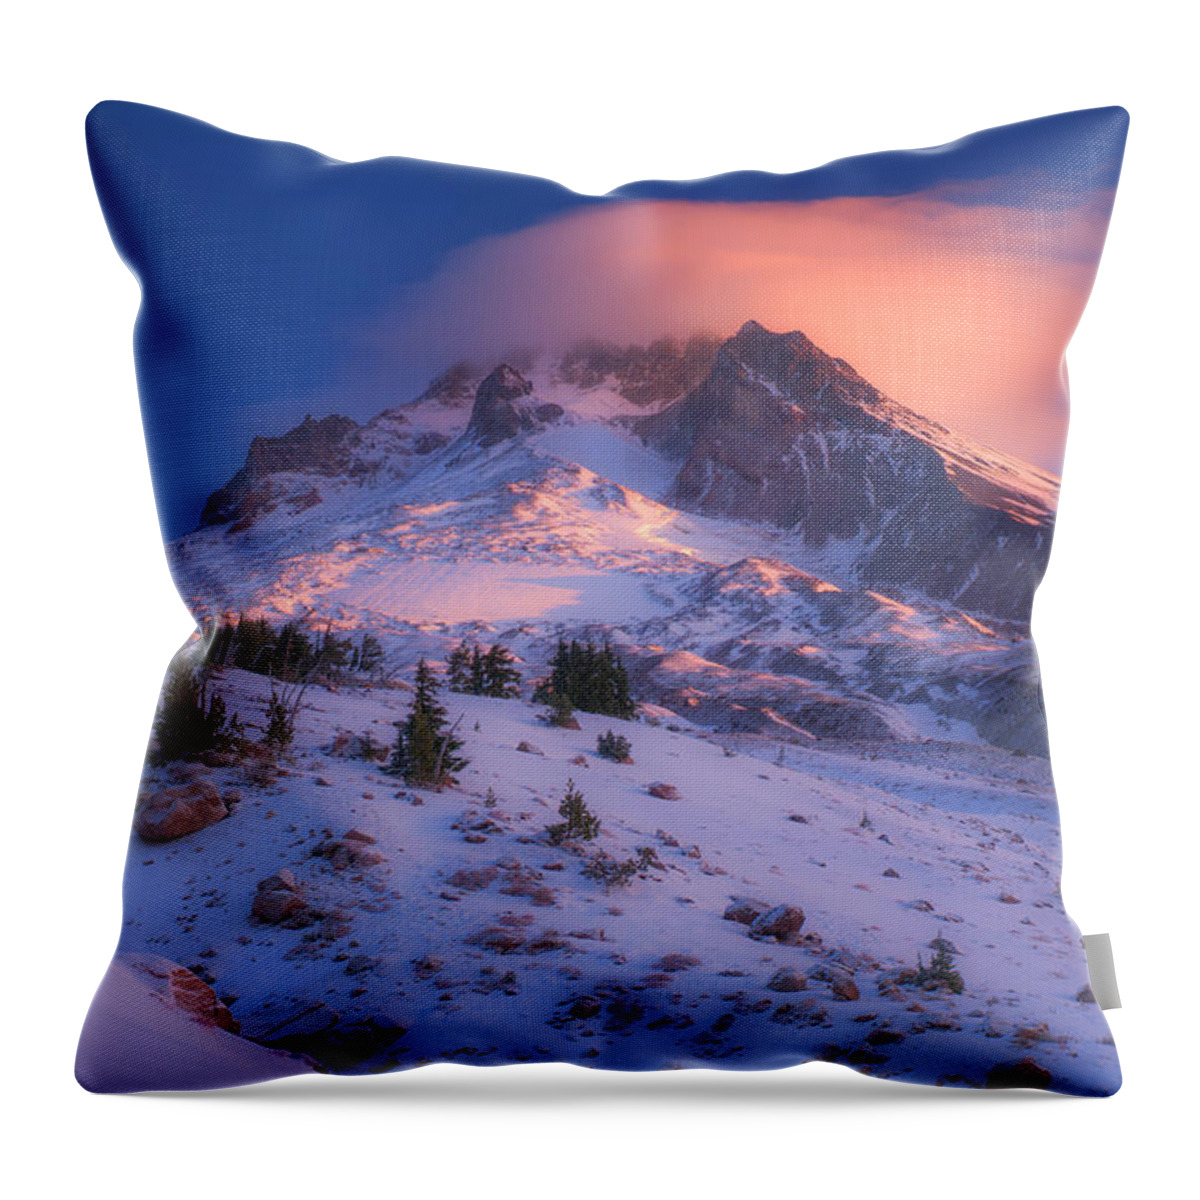 Mount Hood Throw Pillow featuring the photograph Fire Cap by Darren White